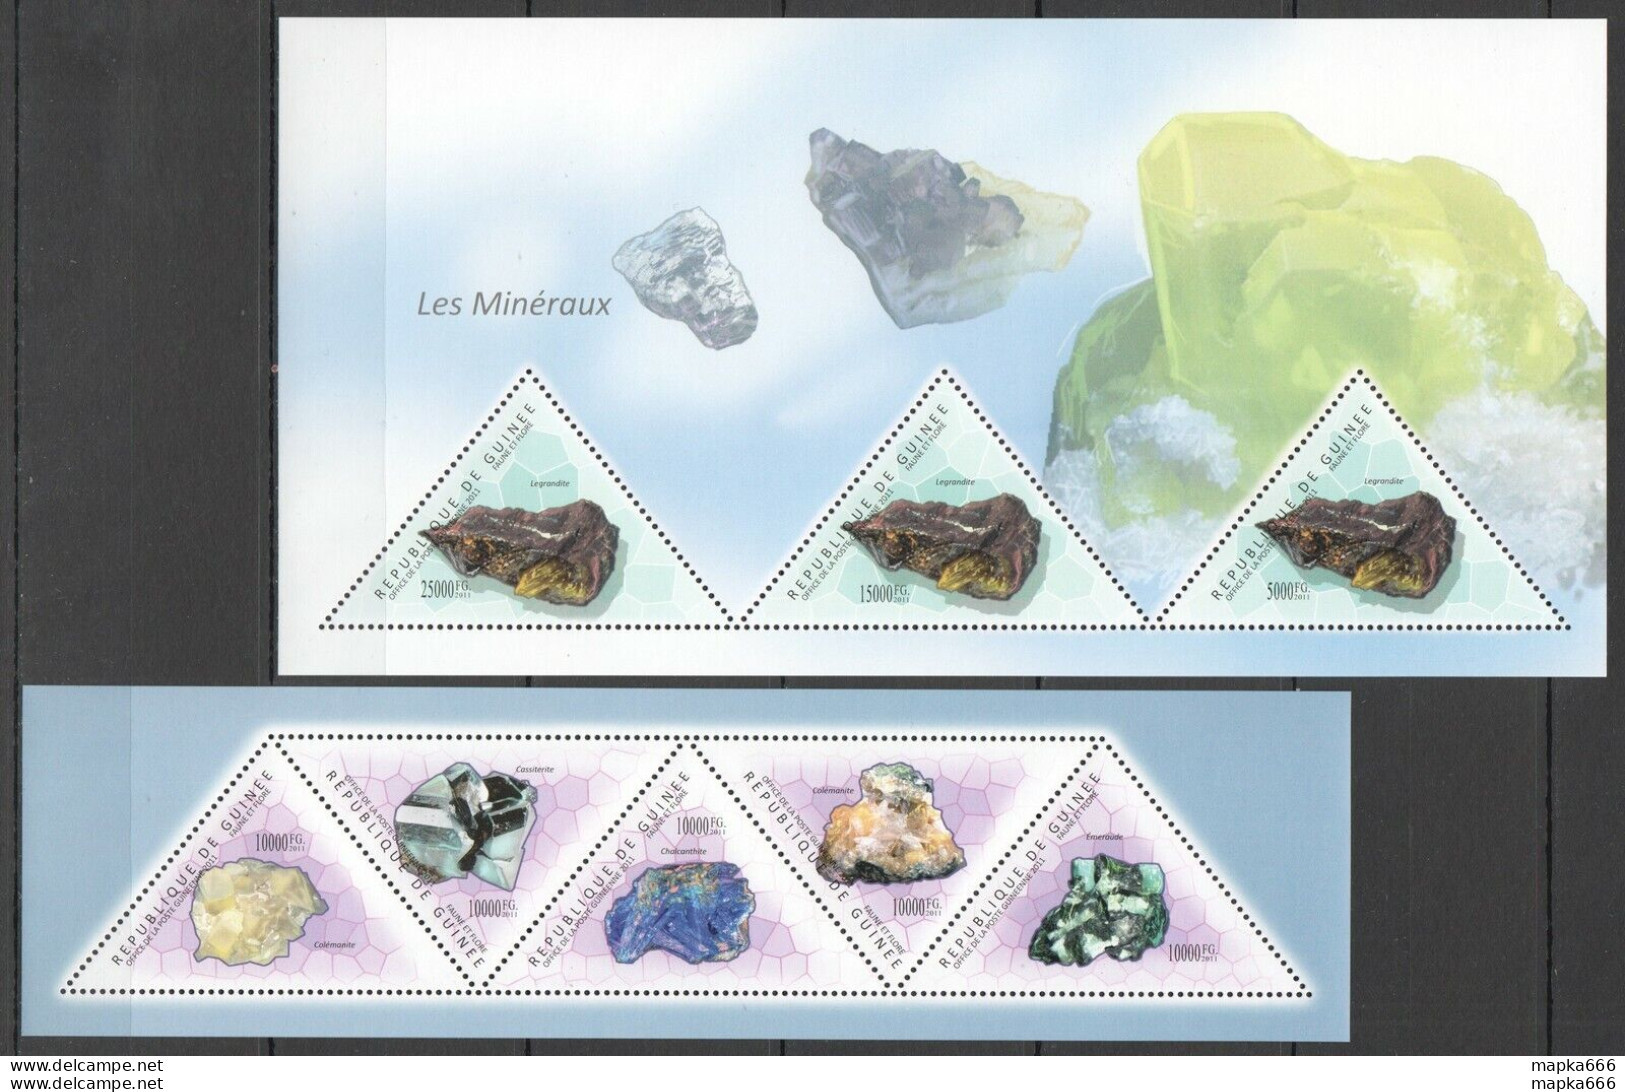 Bc261 2011 Guinea Nature Geology Crystals Minerals Les Mineraux 2Kb Mnh - Minéraux